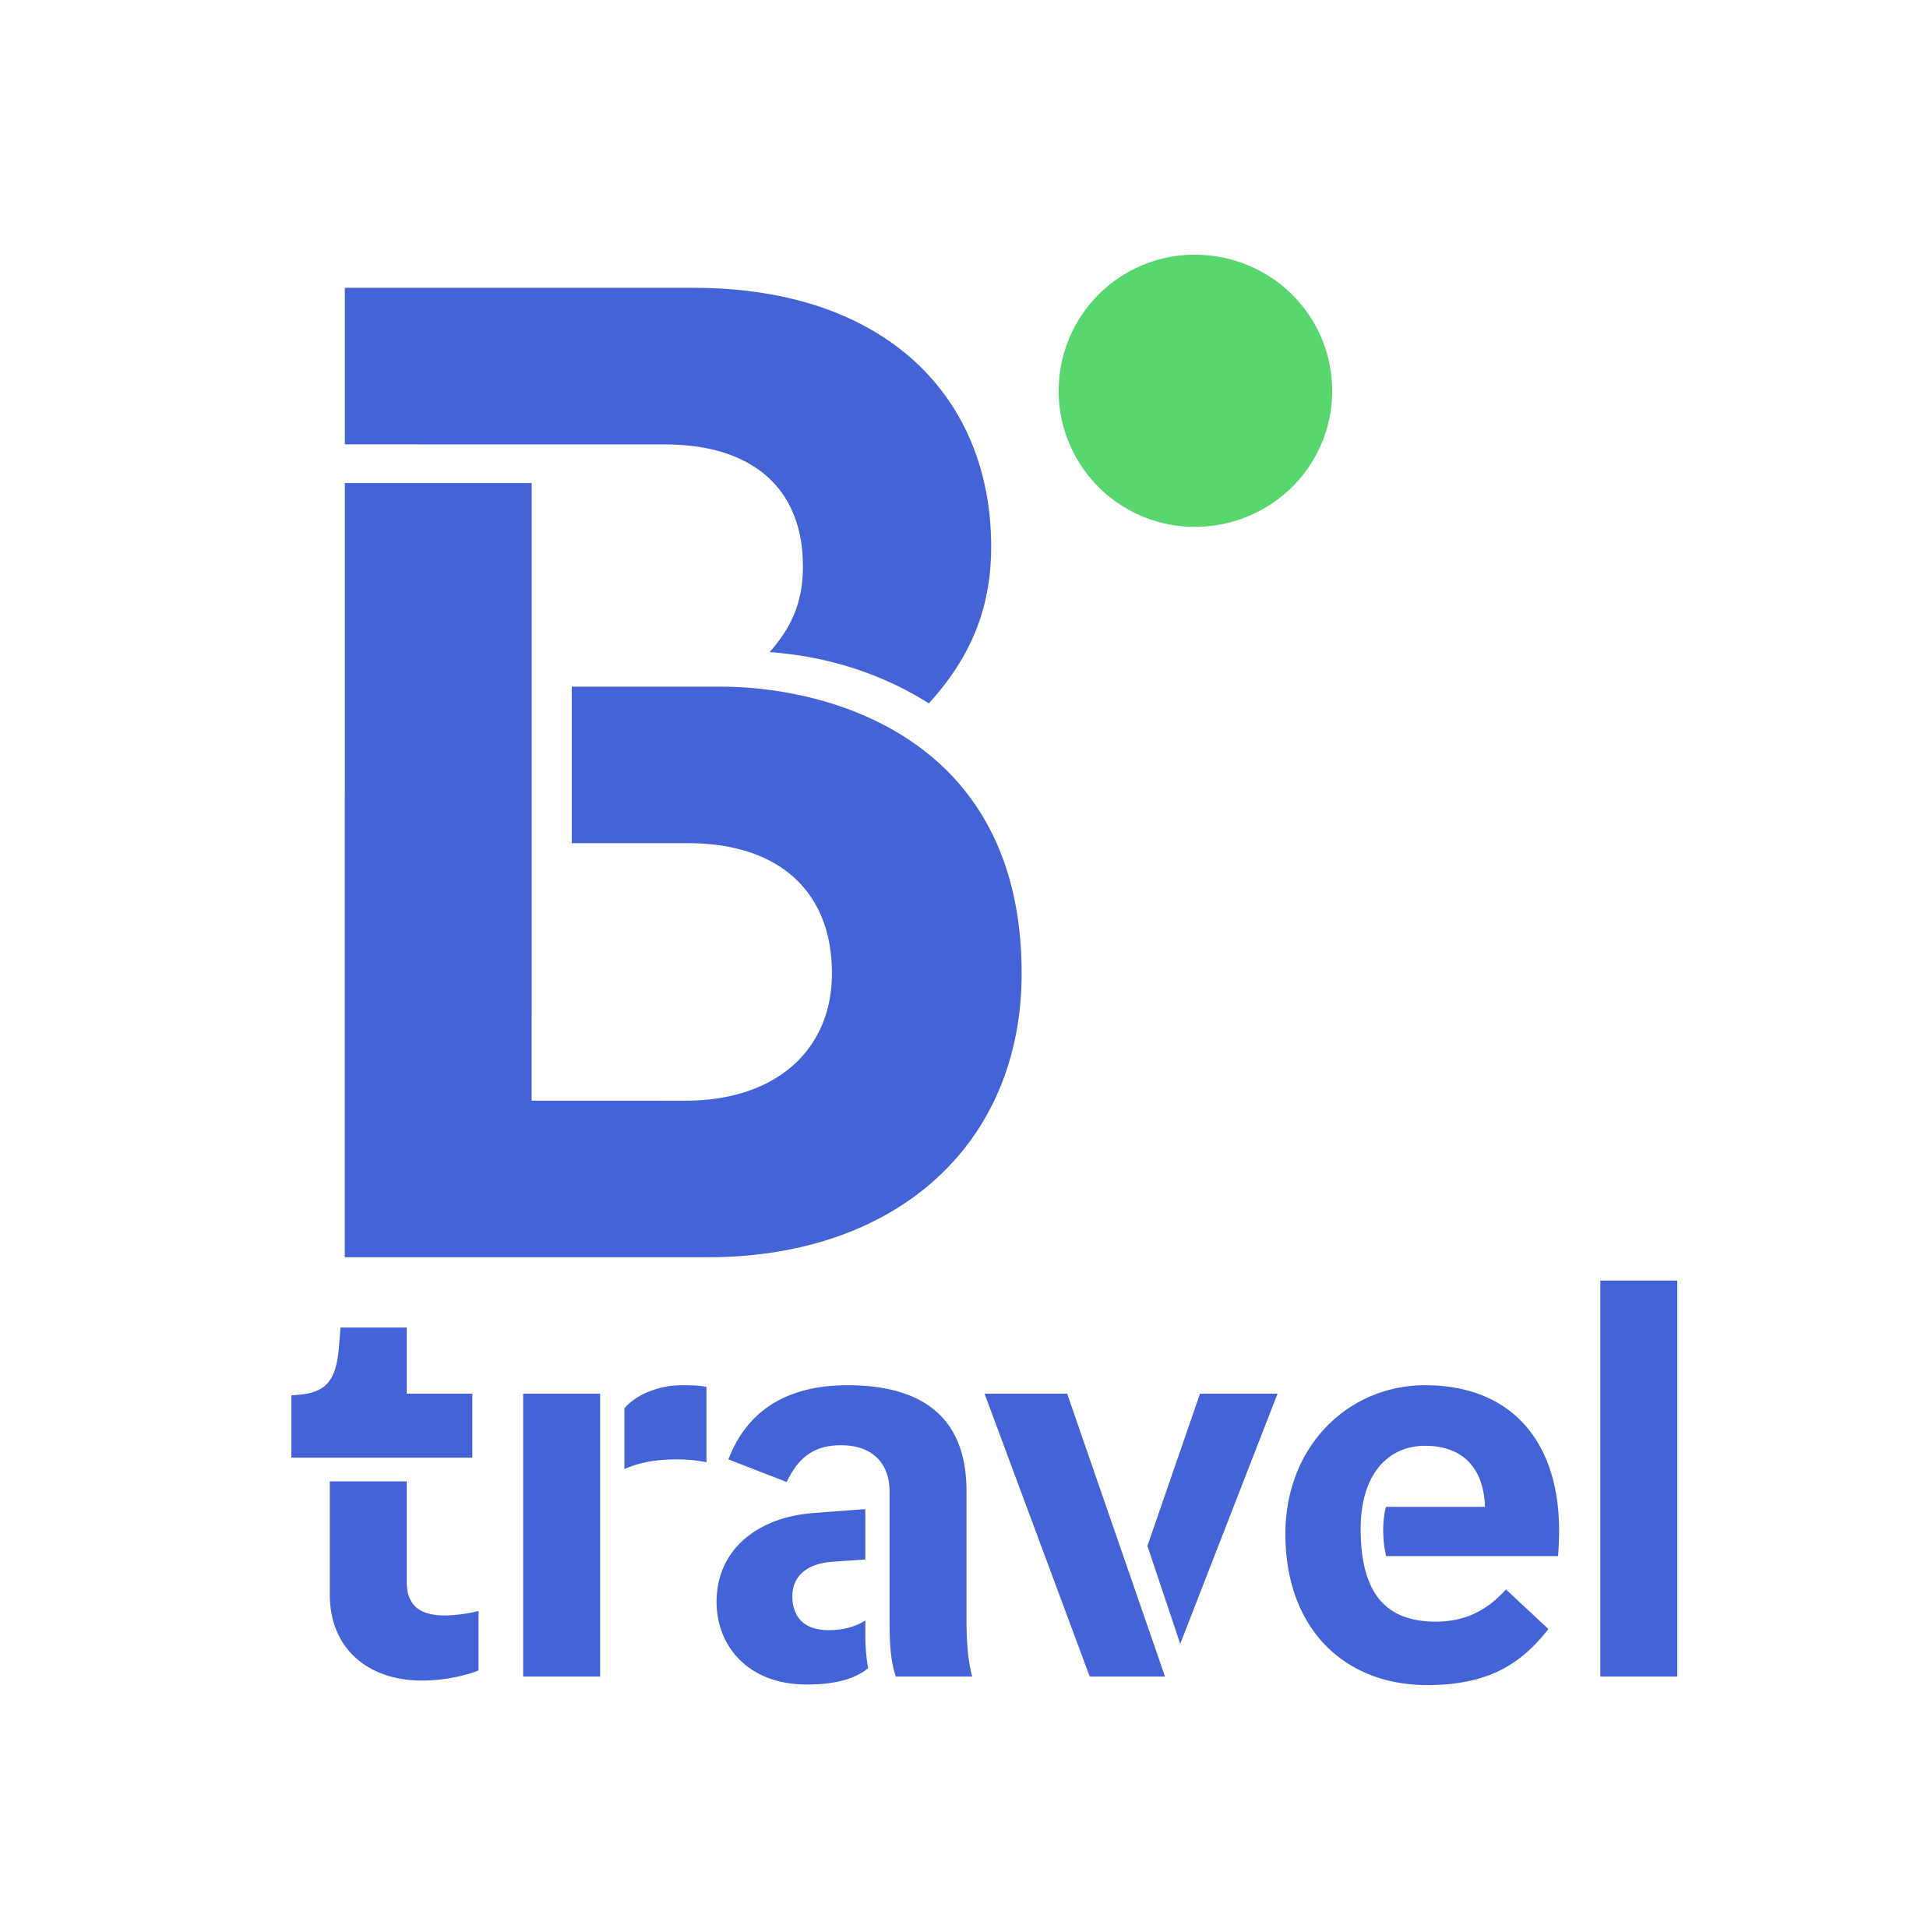 Logotipo de la agencia de viajes B the travel brand